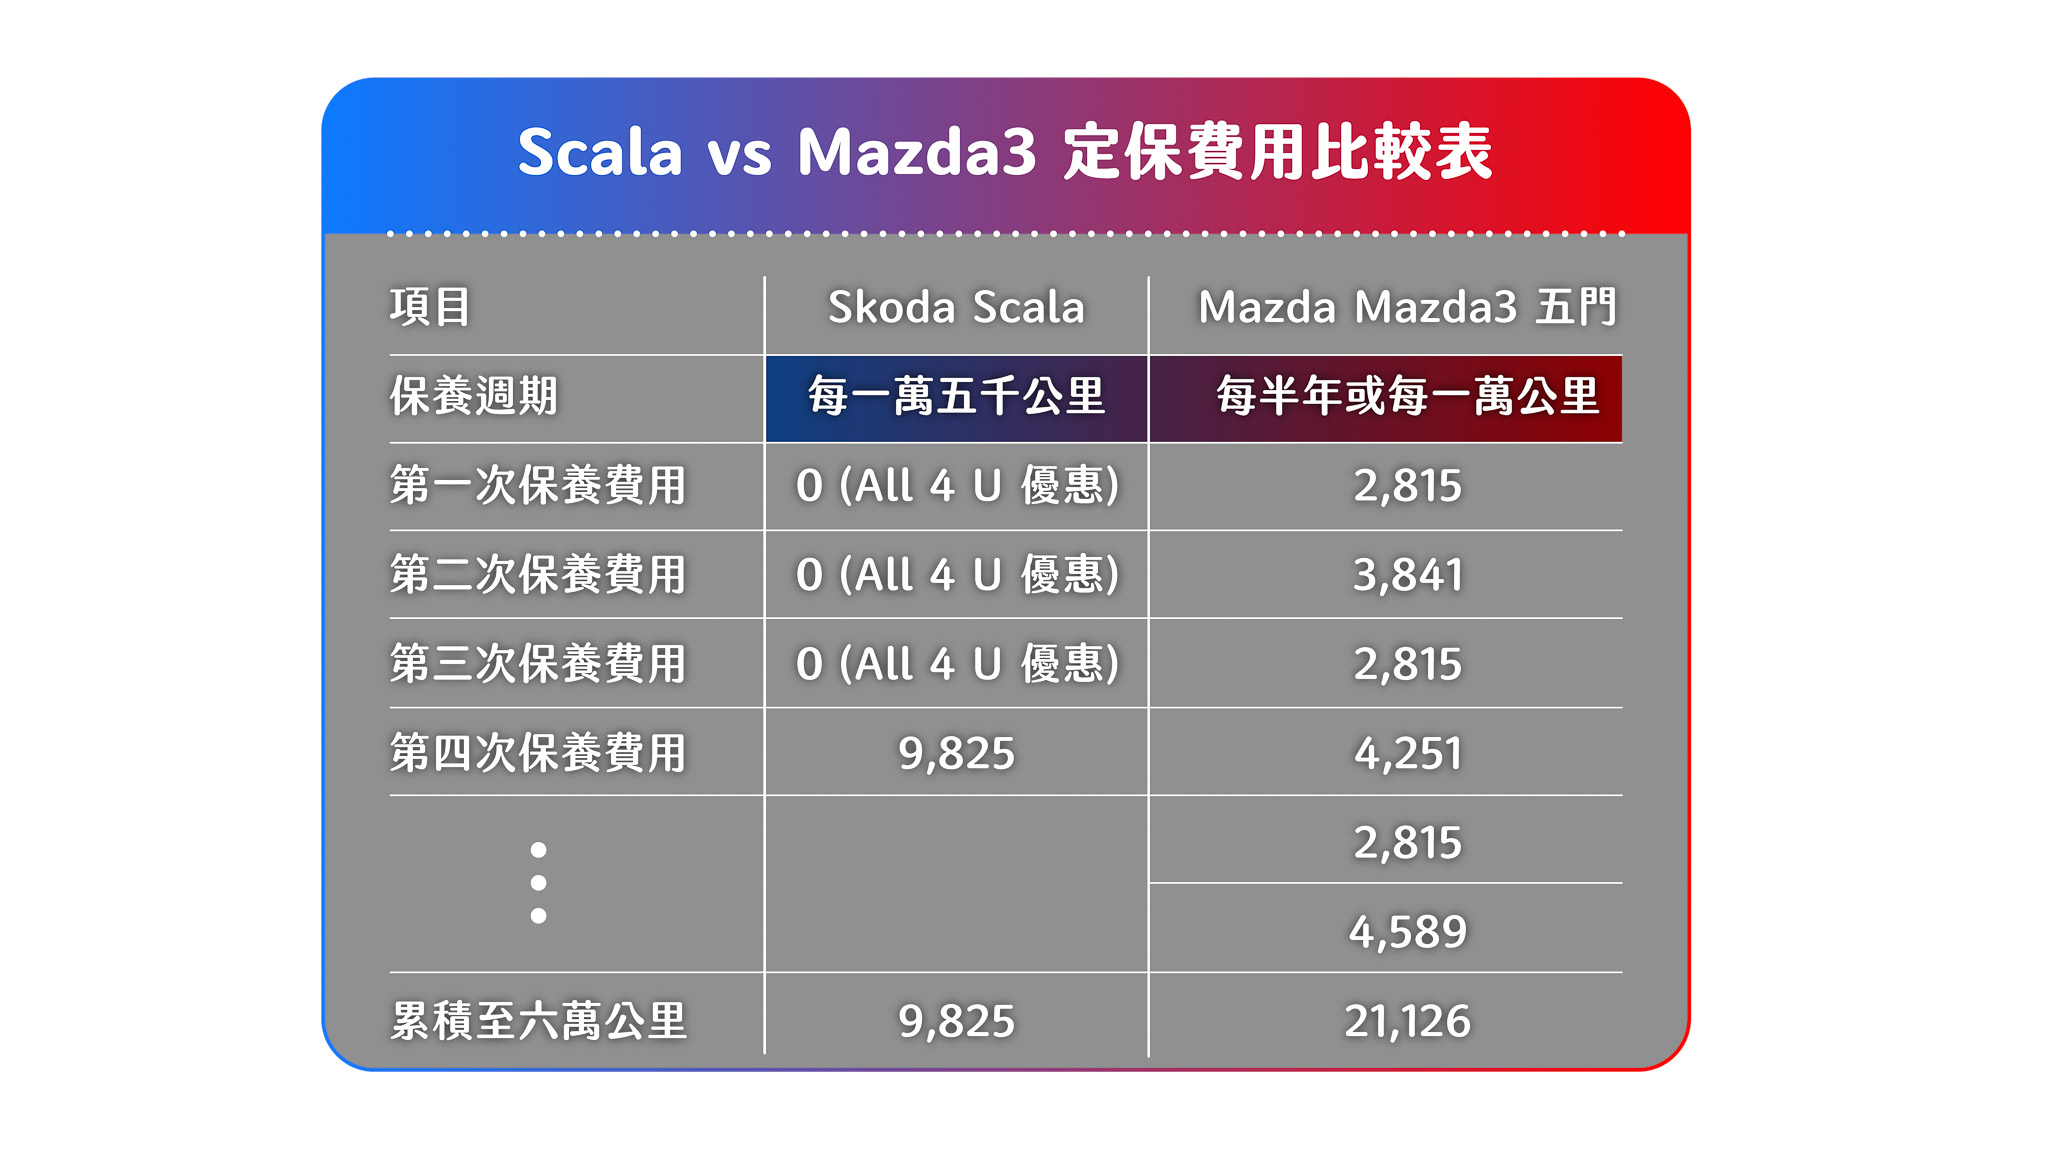 Skoda 因為有推出 All 4 U 保養優惠專案，所以前三次保養不用錢，到六萬公里，基本上 Scala 才進行一次保養，為兩者關鍵差異處。